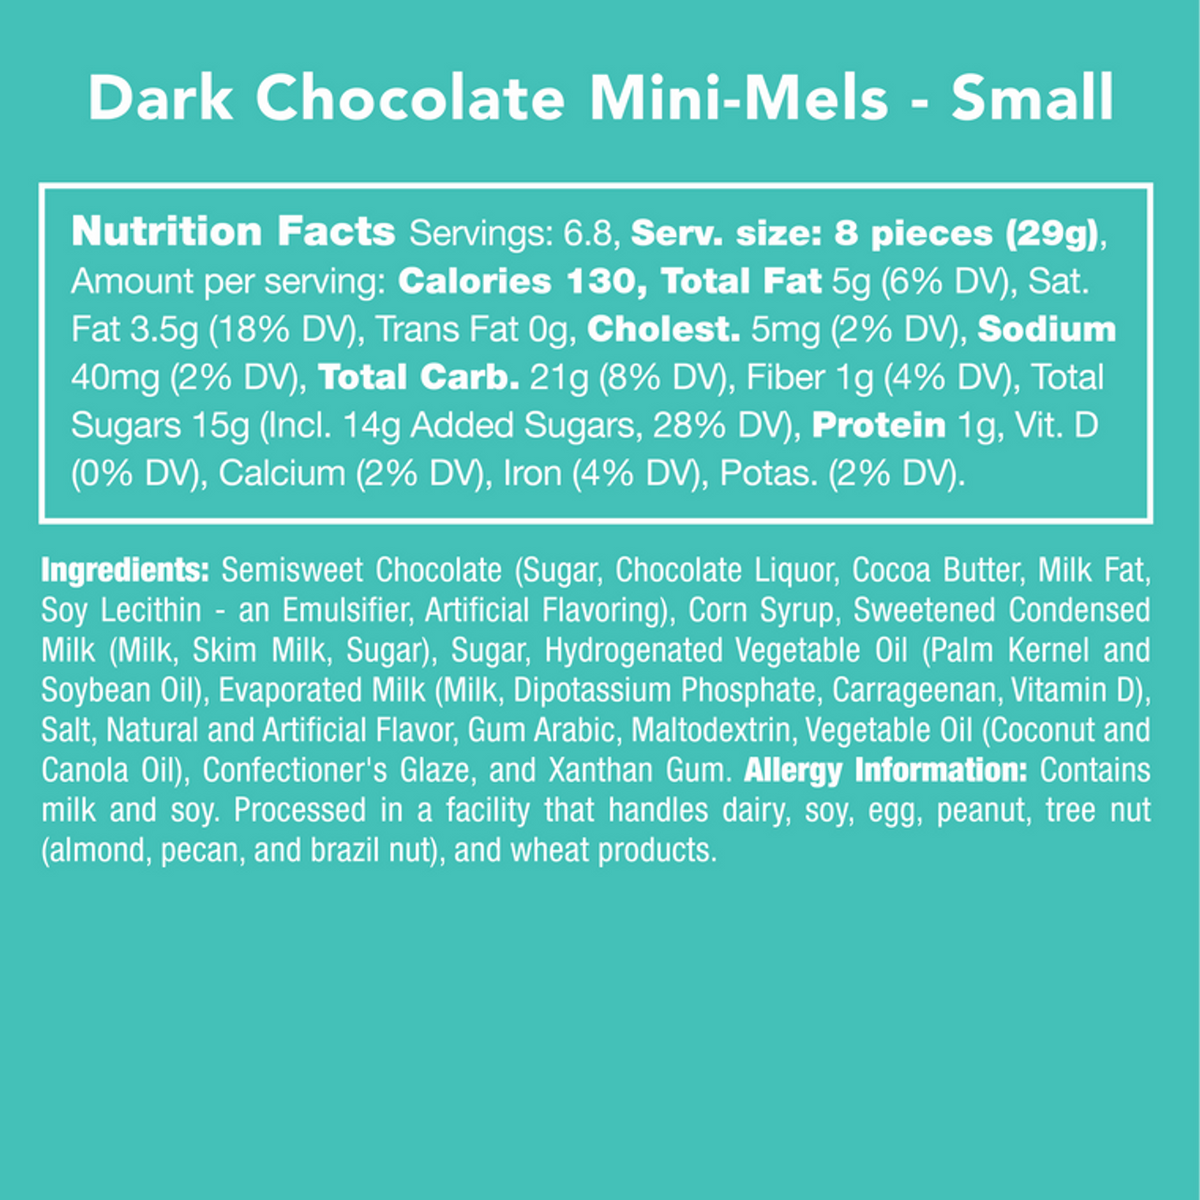 Dark Chocolate Mini-Mels